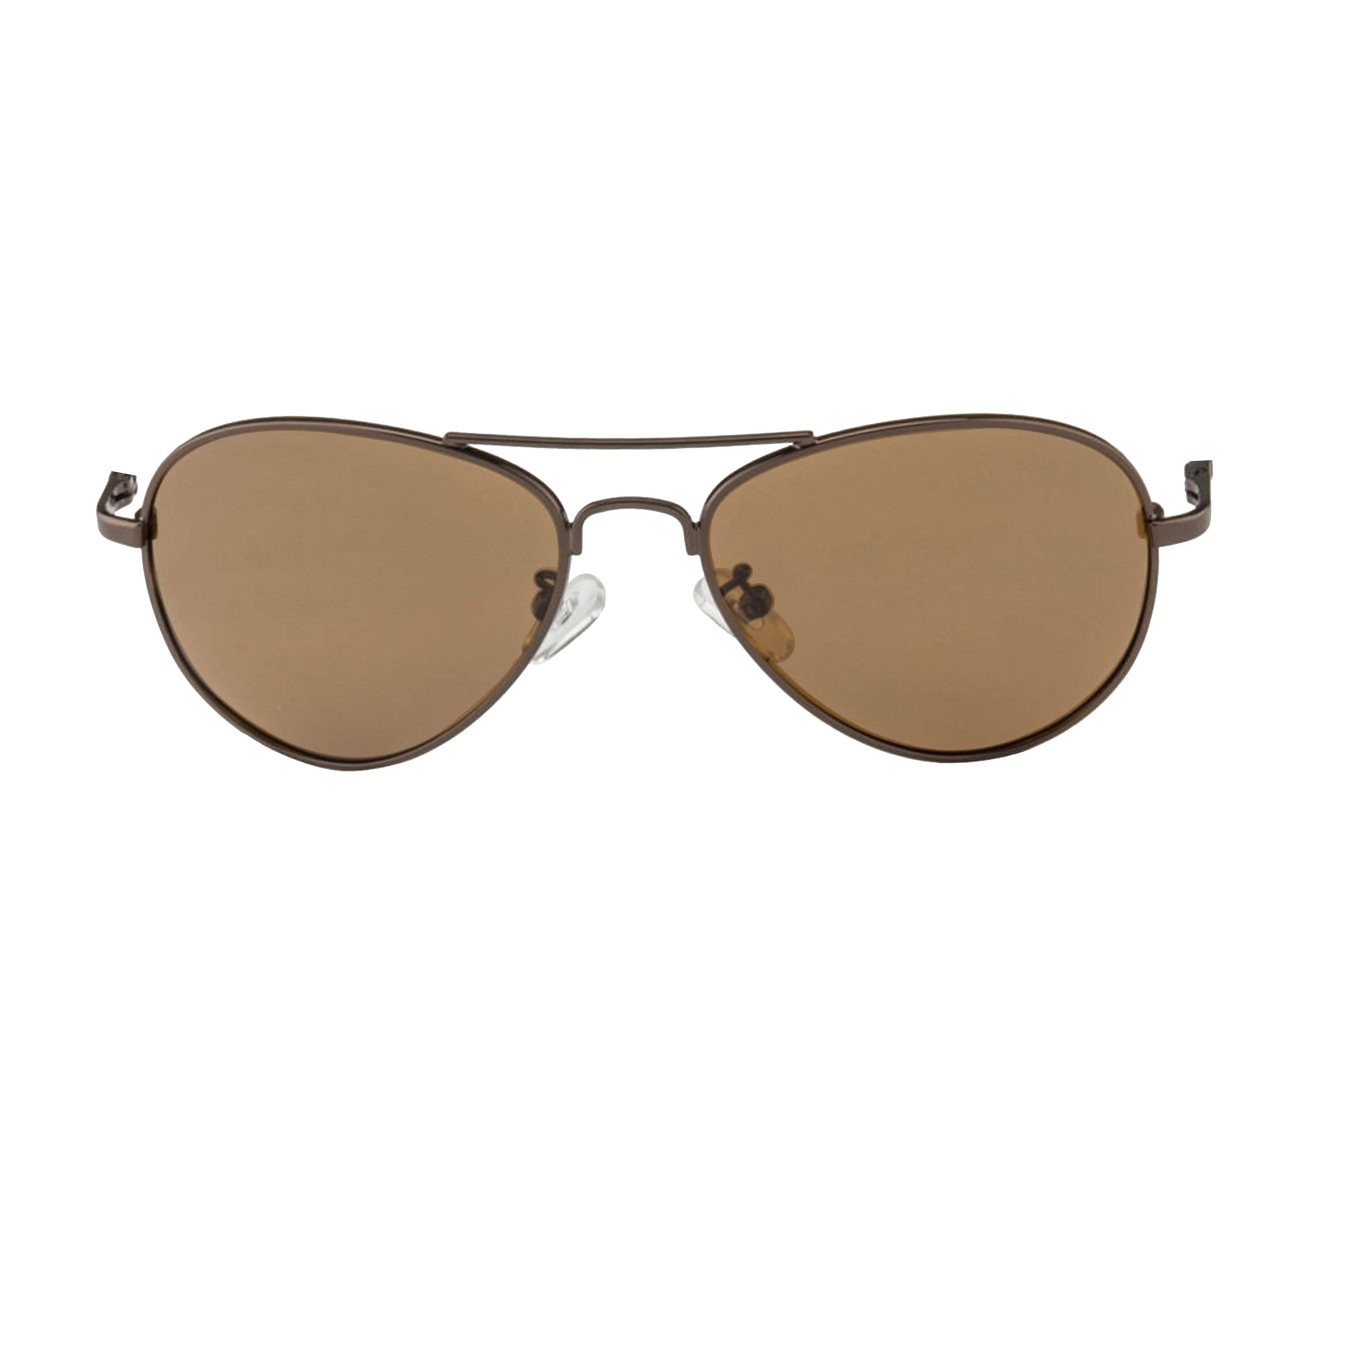 Aviator Sunglasses Clipart